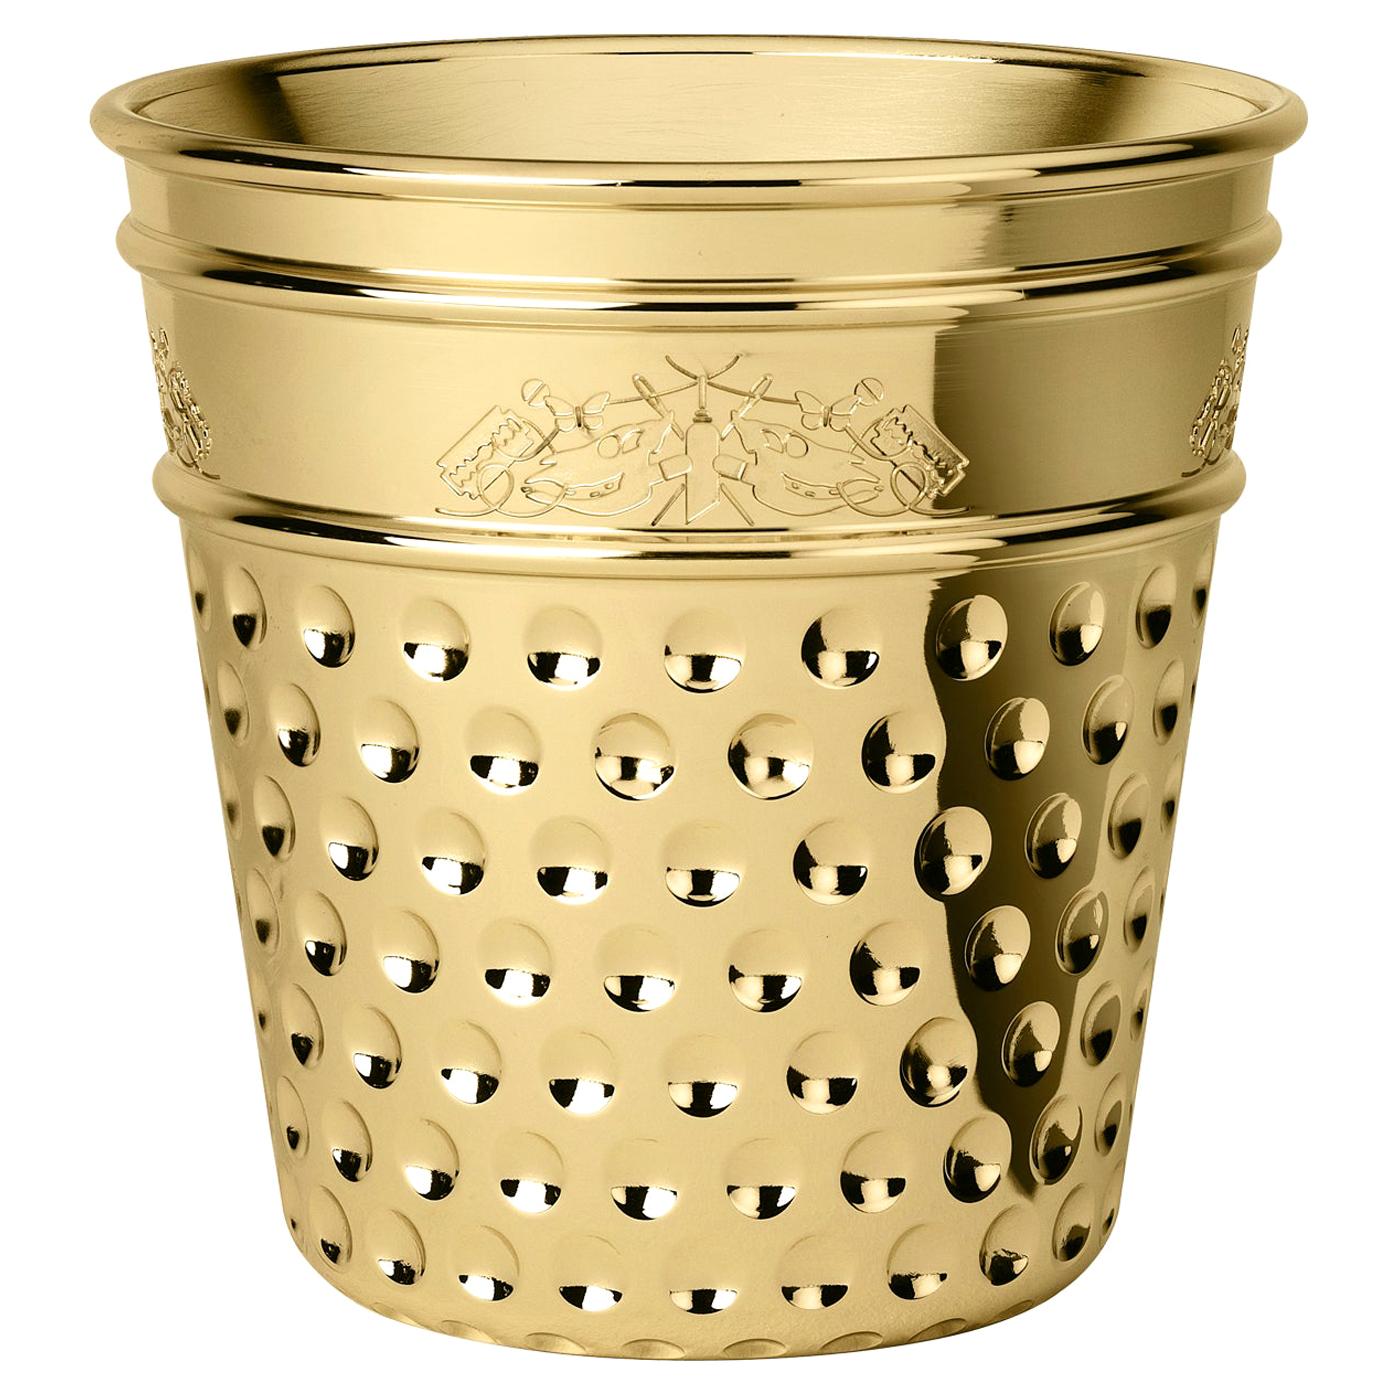 Here Ice Bucket Gold By Studio Job